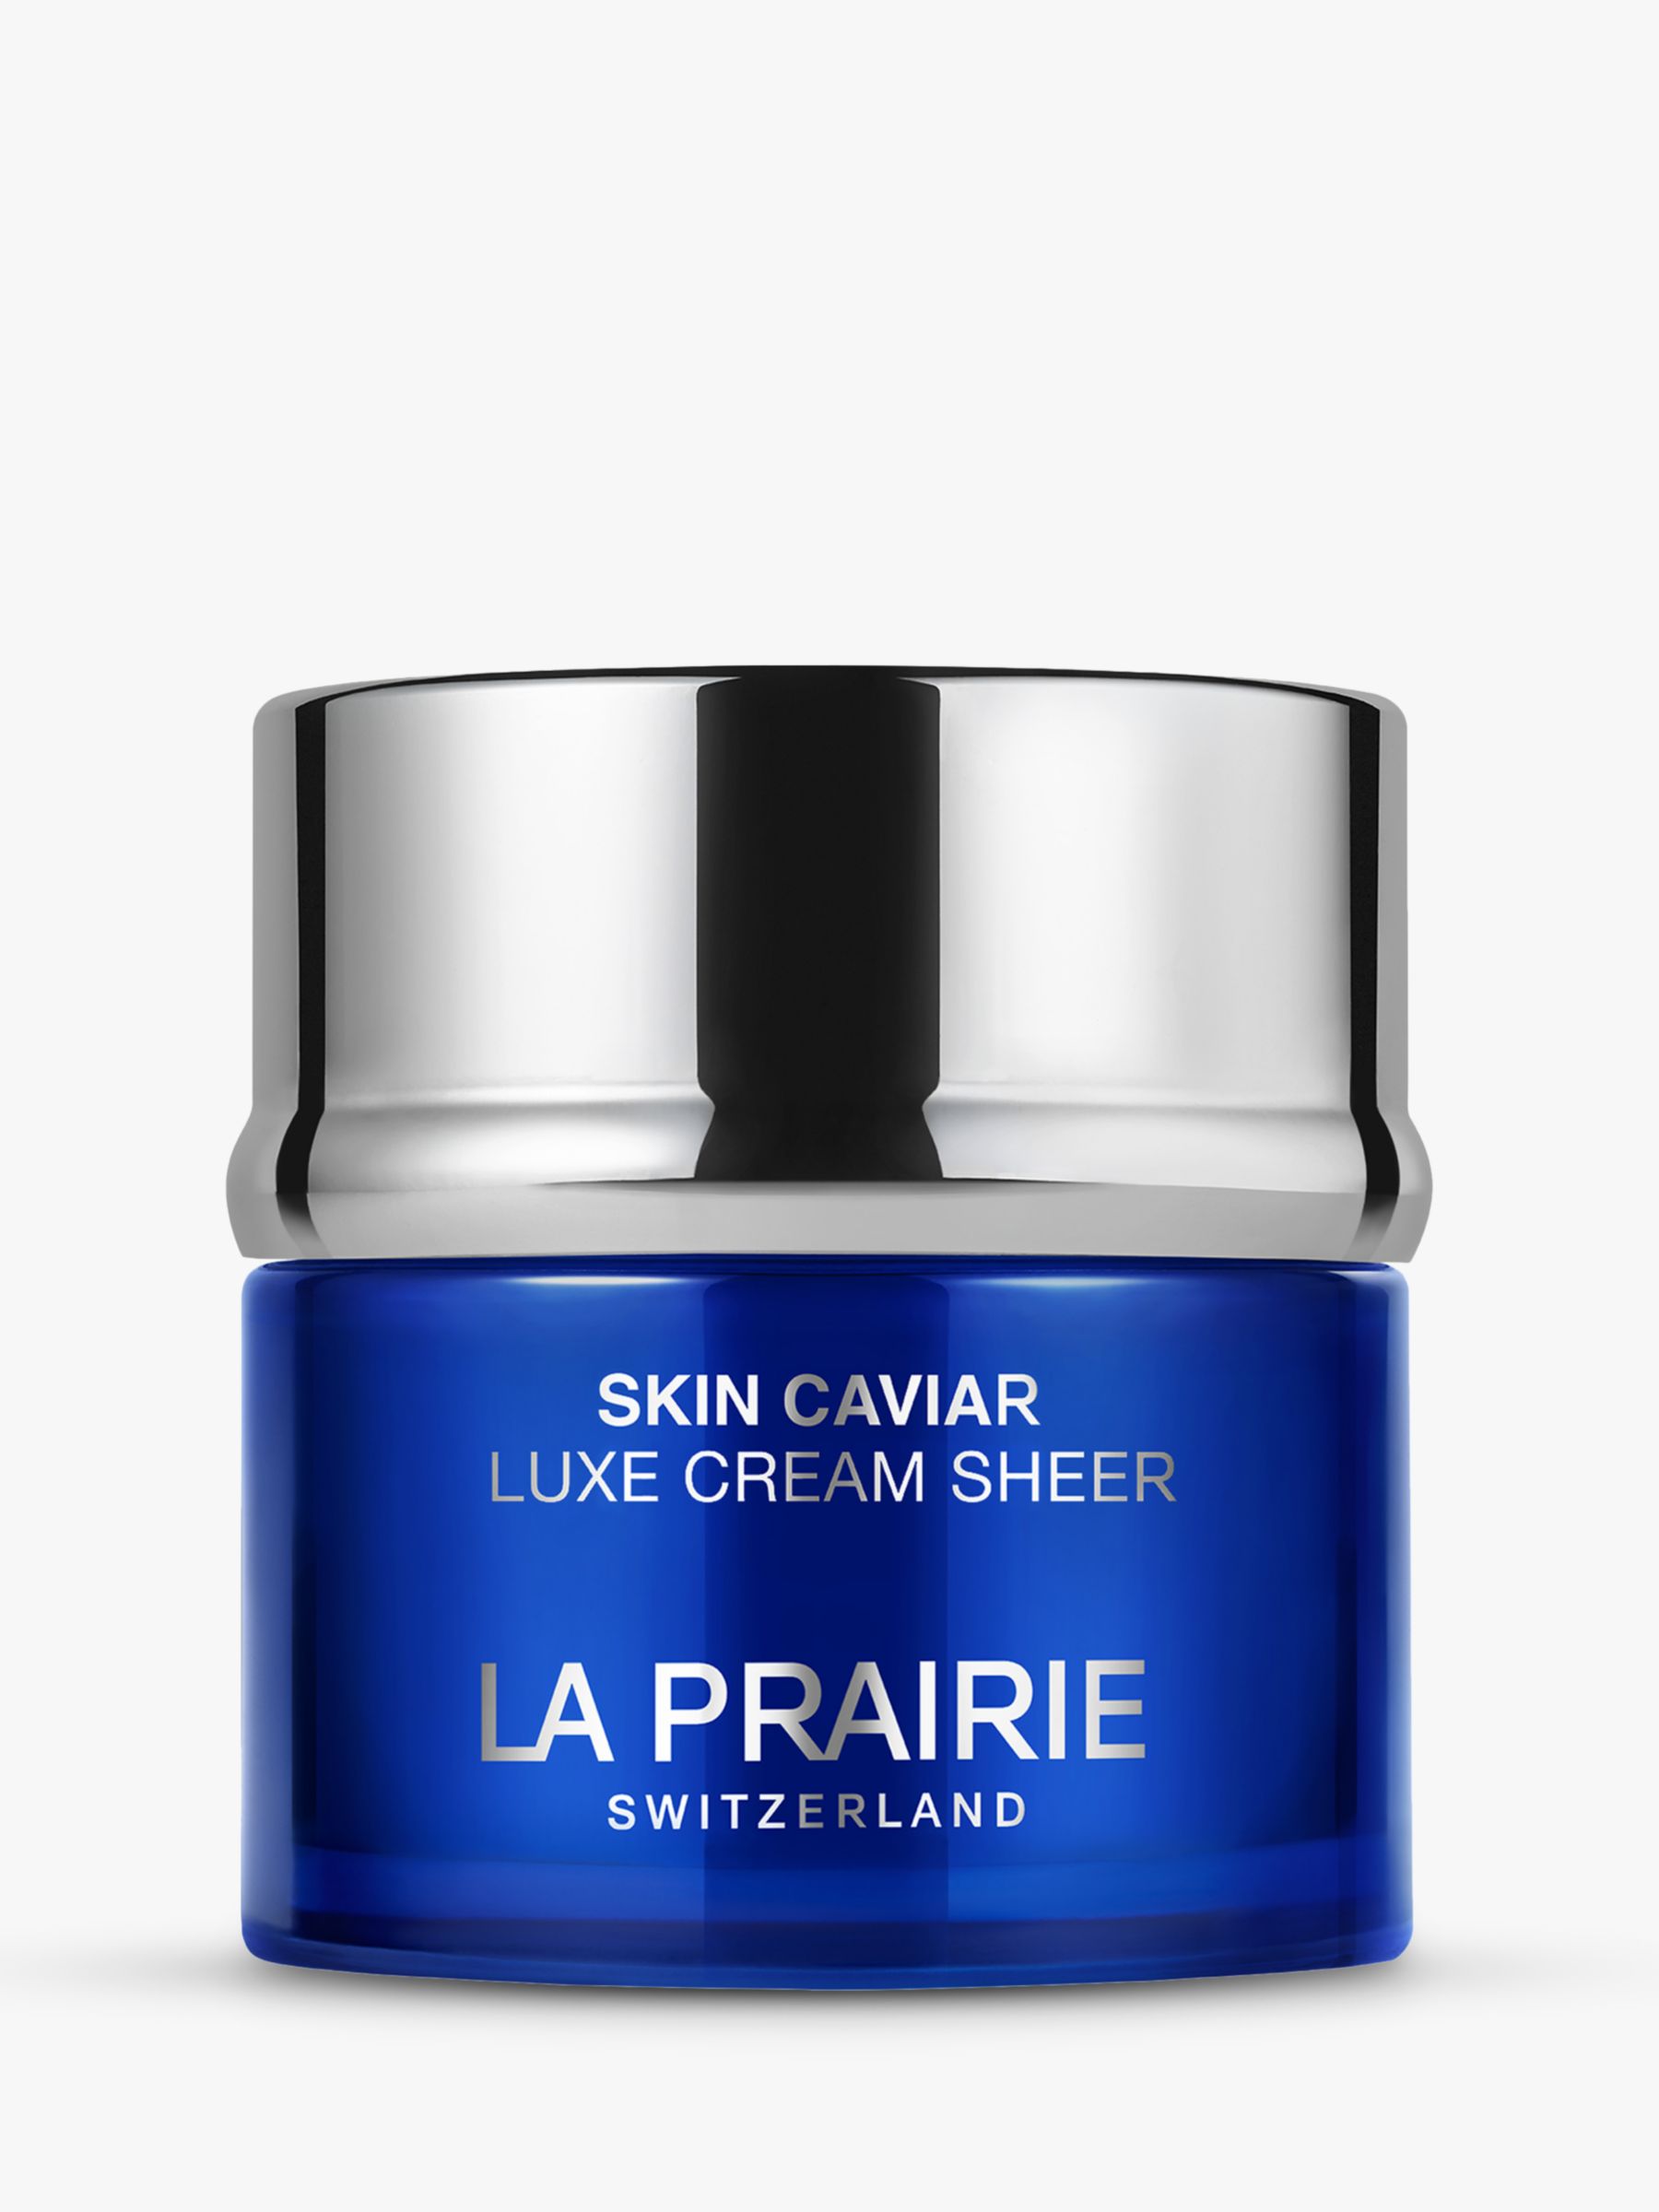 La Prairie Skin Caviar Luxe Cream Sheer, 50ml 1